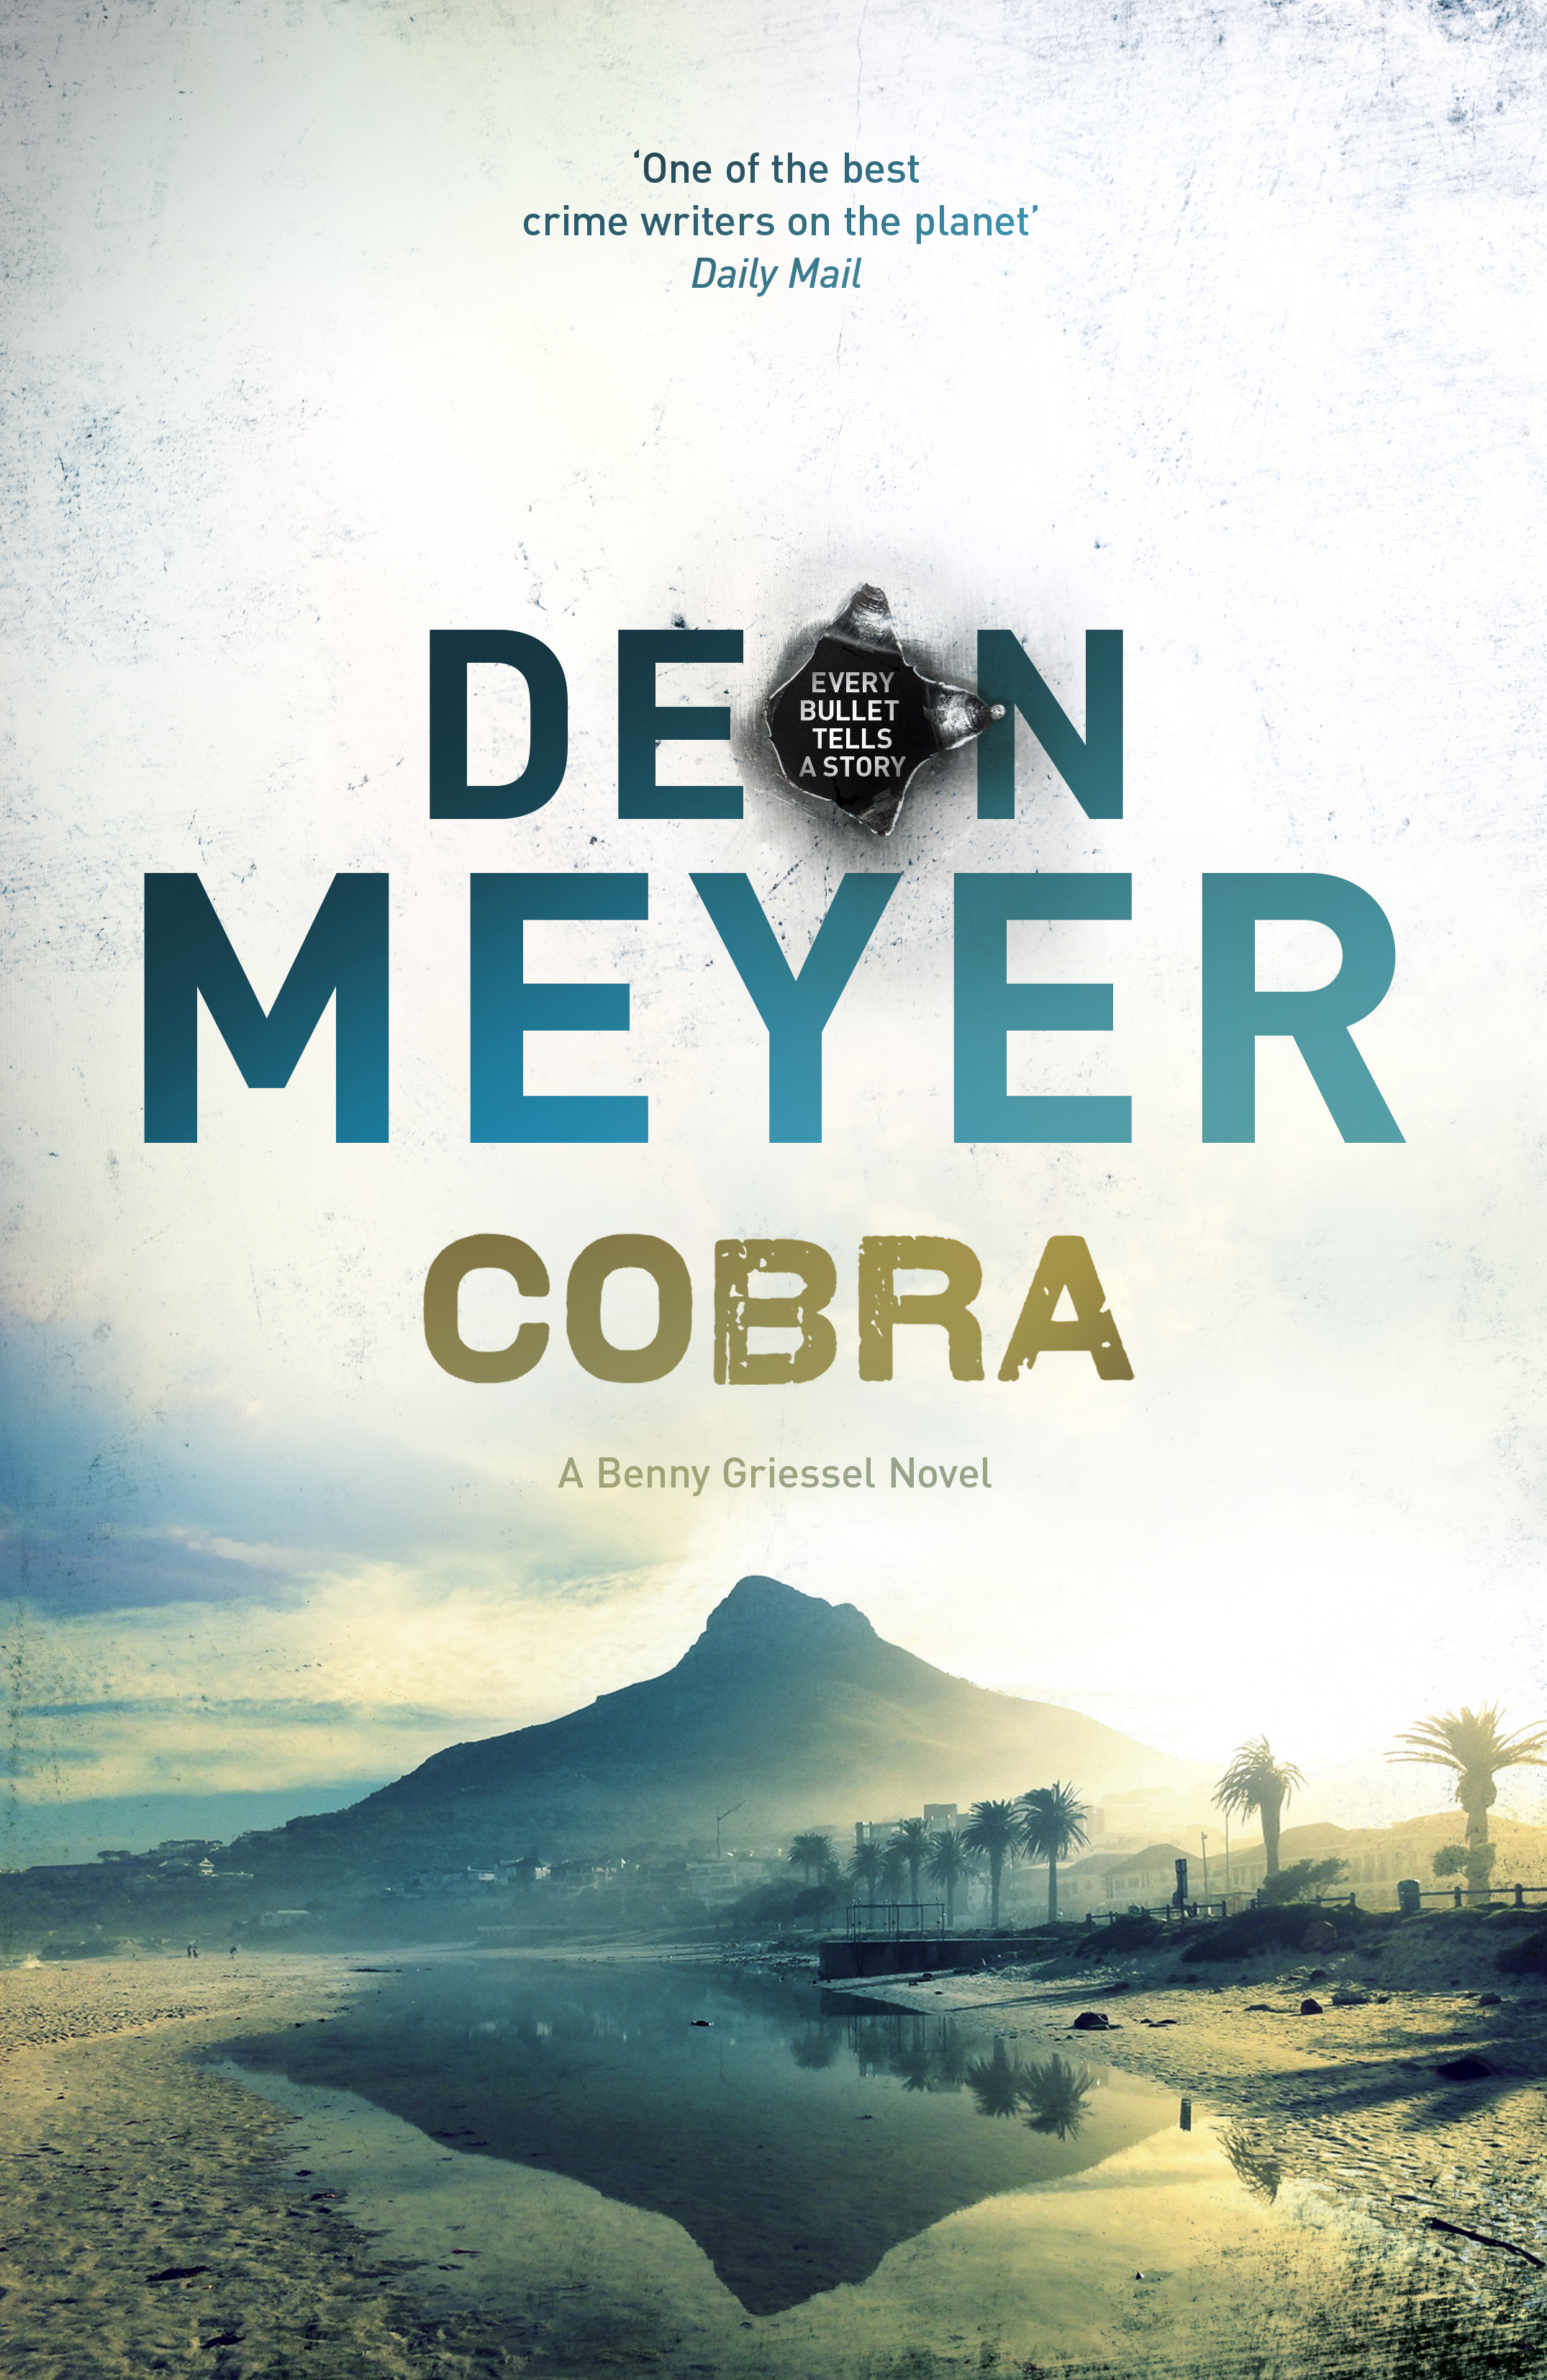 COBRA by Deon Meyer published in paperback tomorrow — Blake Friedmann